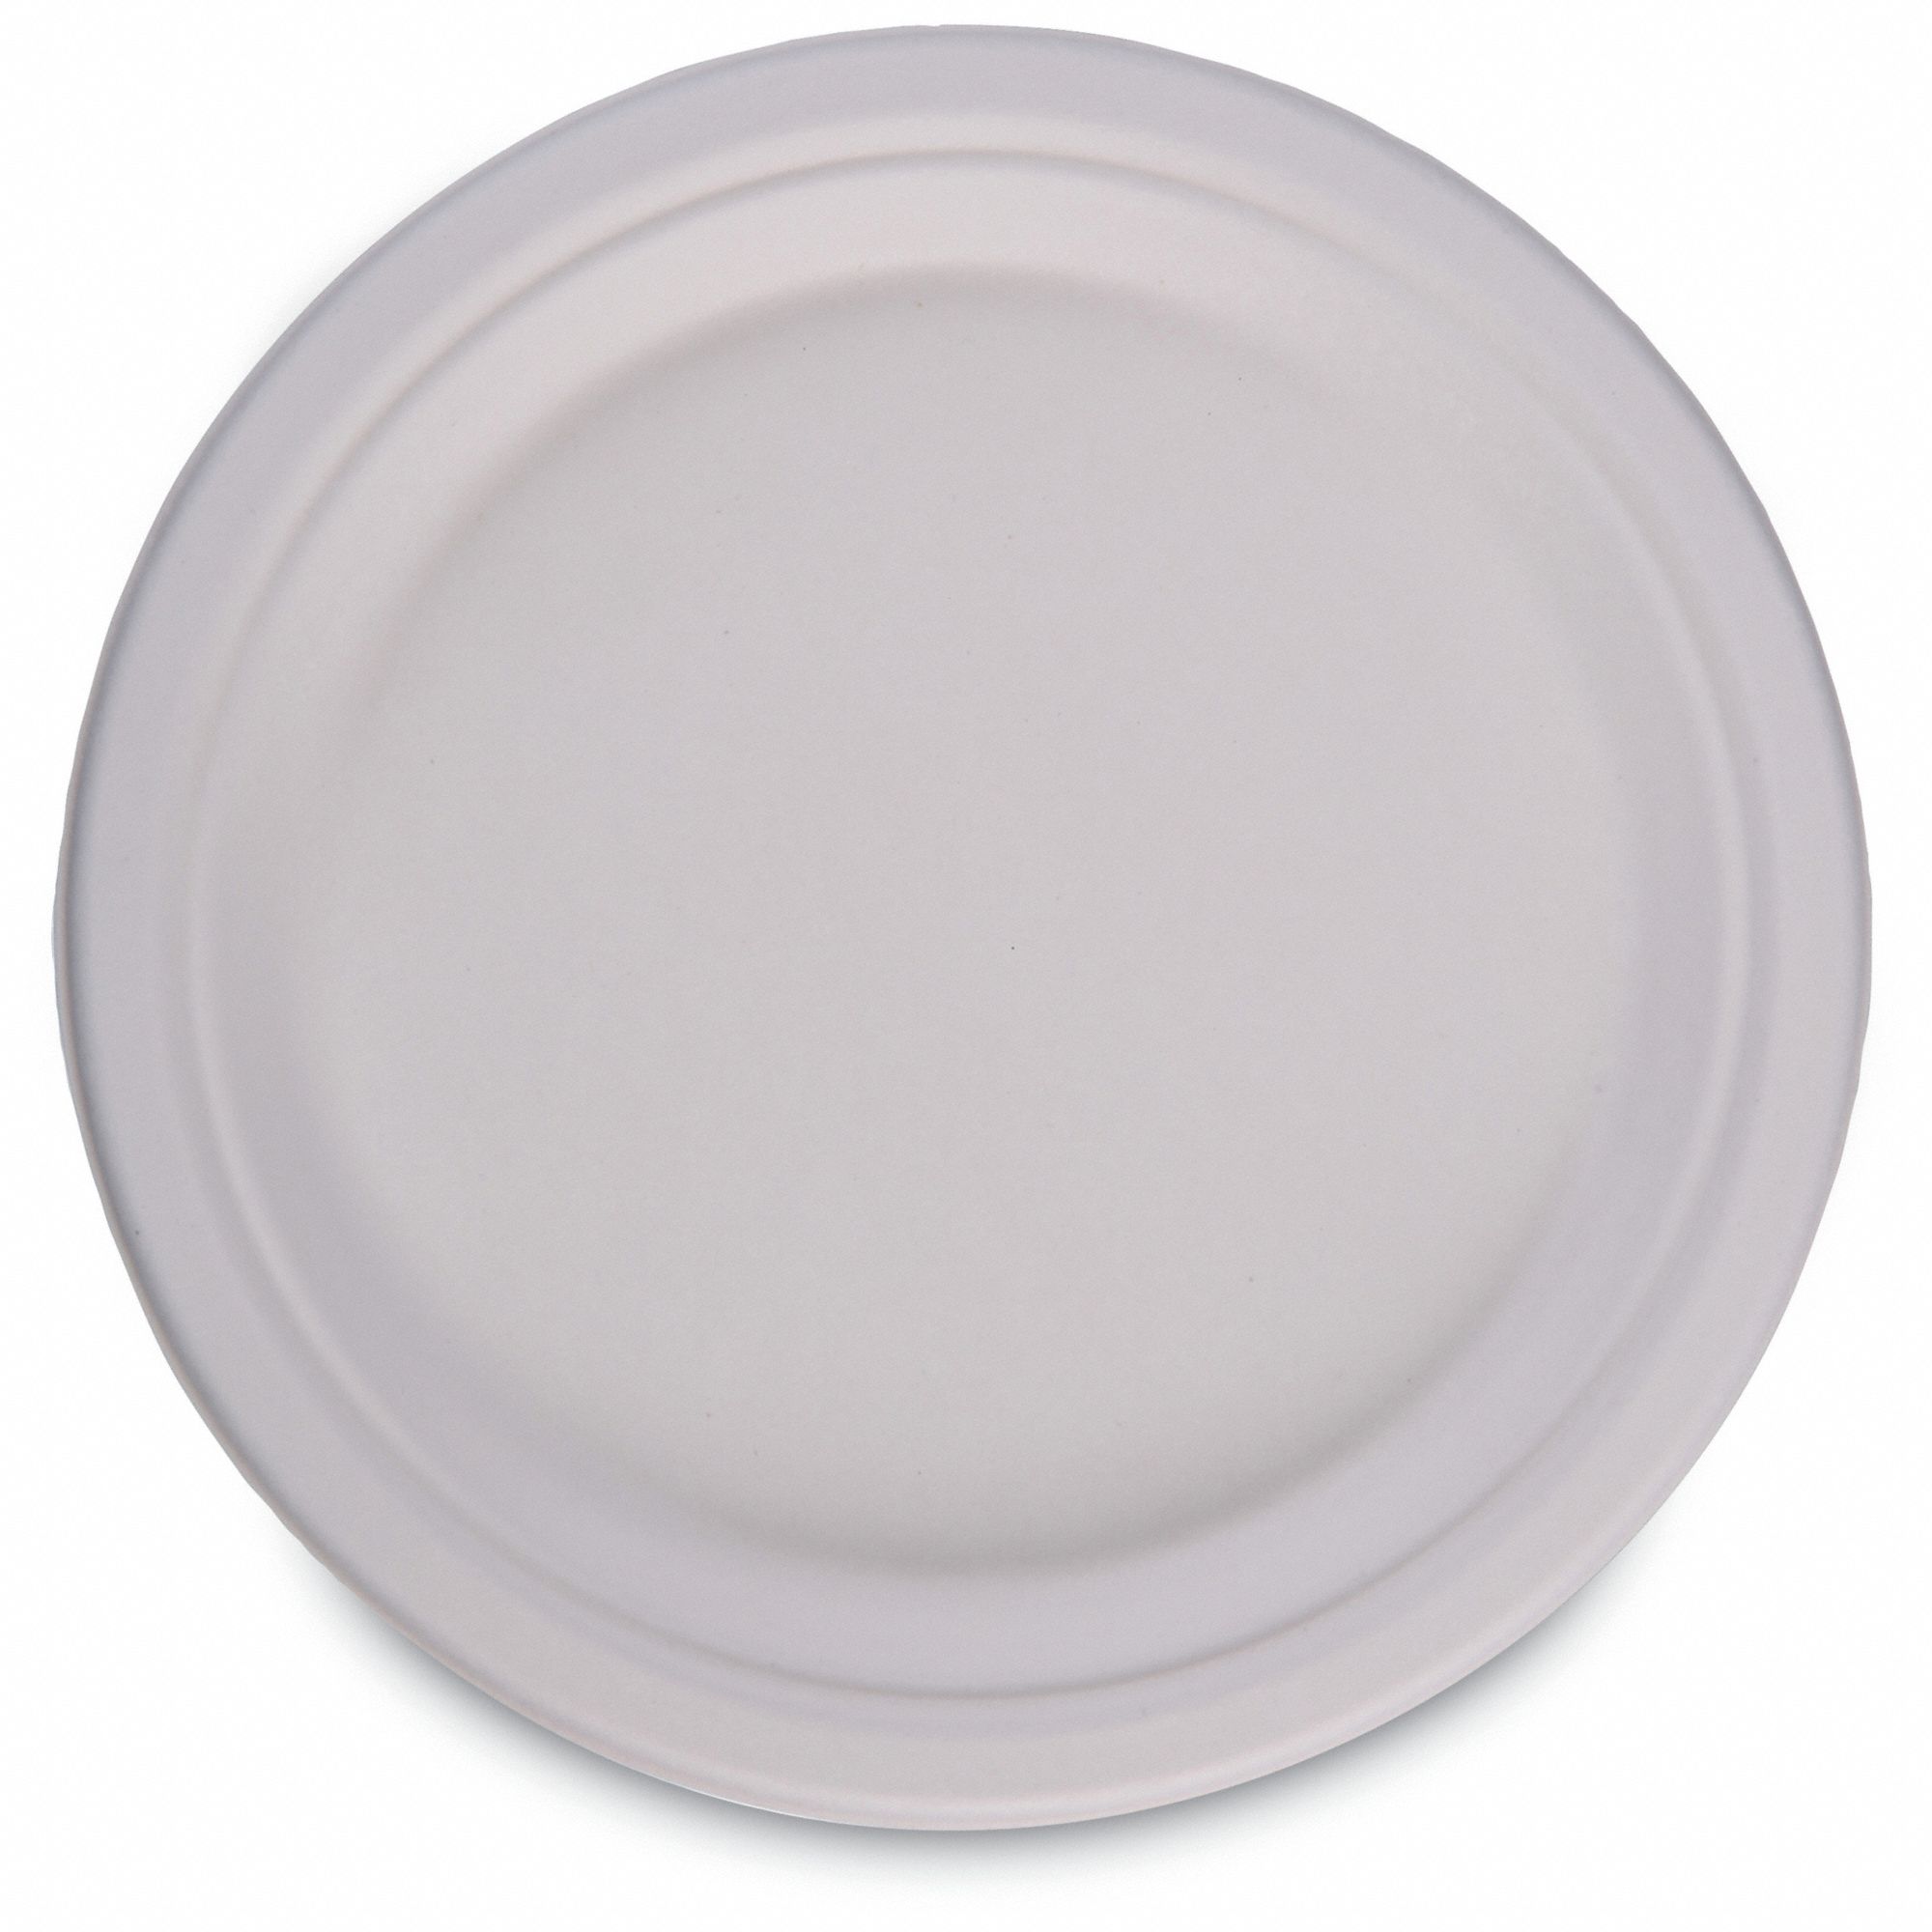 Disposable Fiber Plate: White, Medium-Wt, 9 in Disposable Plate Size, 500 PK